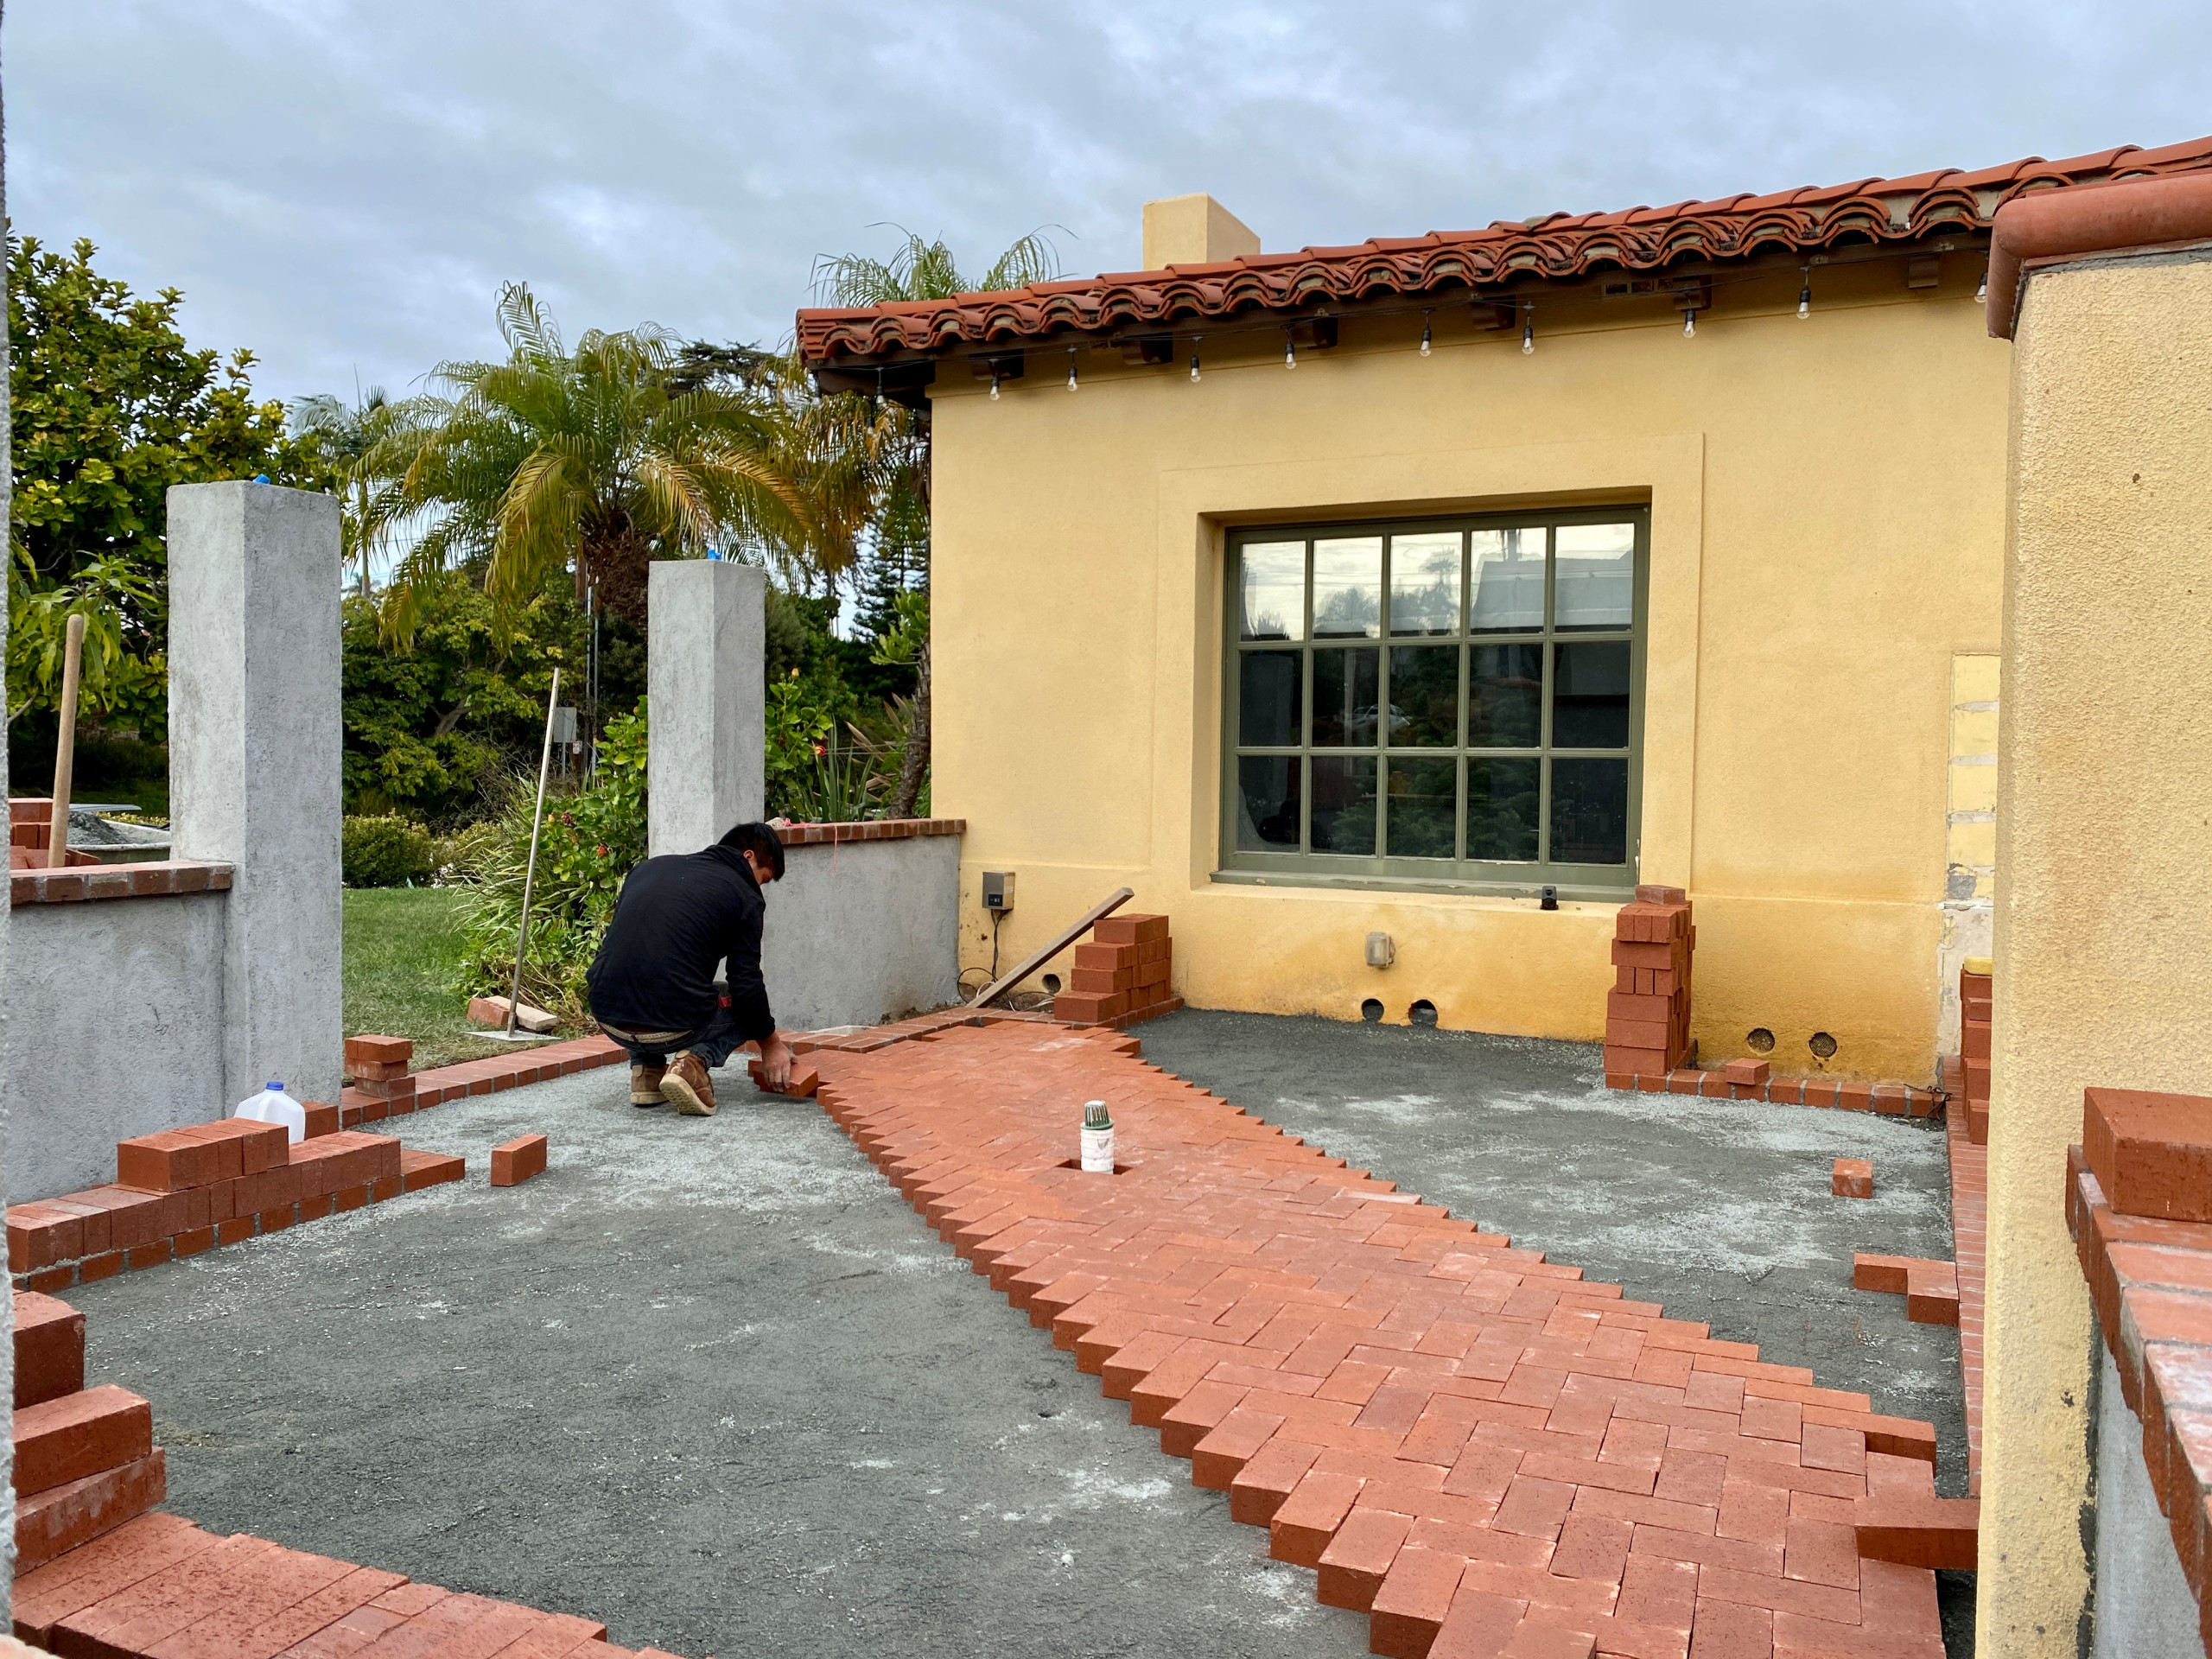 Installing a Herringbone Brick Patio in Point Loma